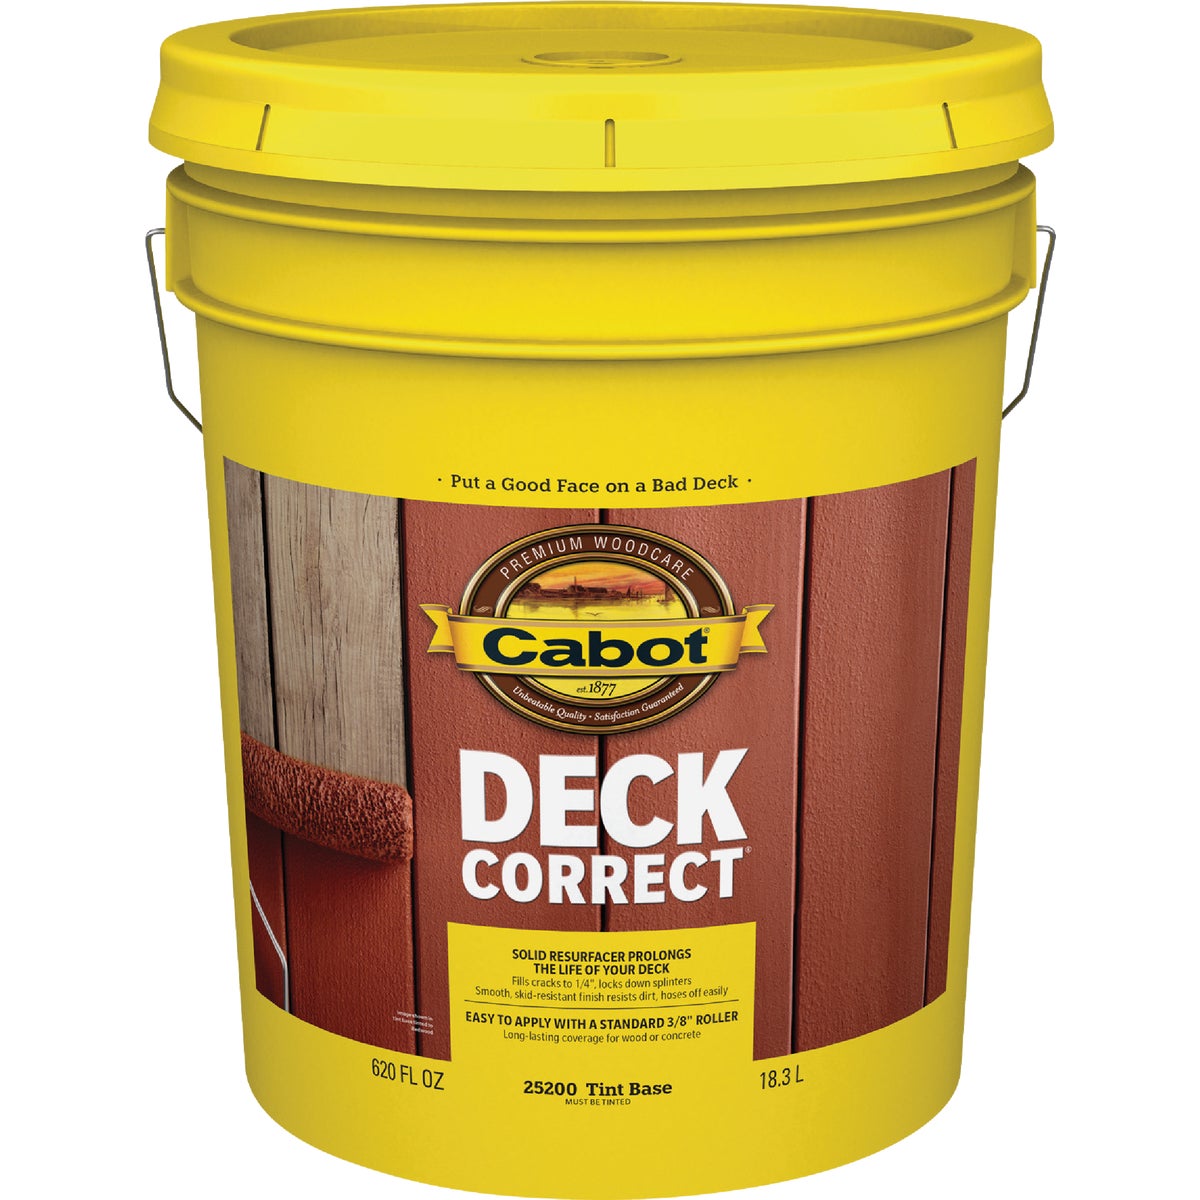 Cabot DeckCorrect Tint Base Wood Deck Resurfacer, 5 Gal.